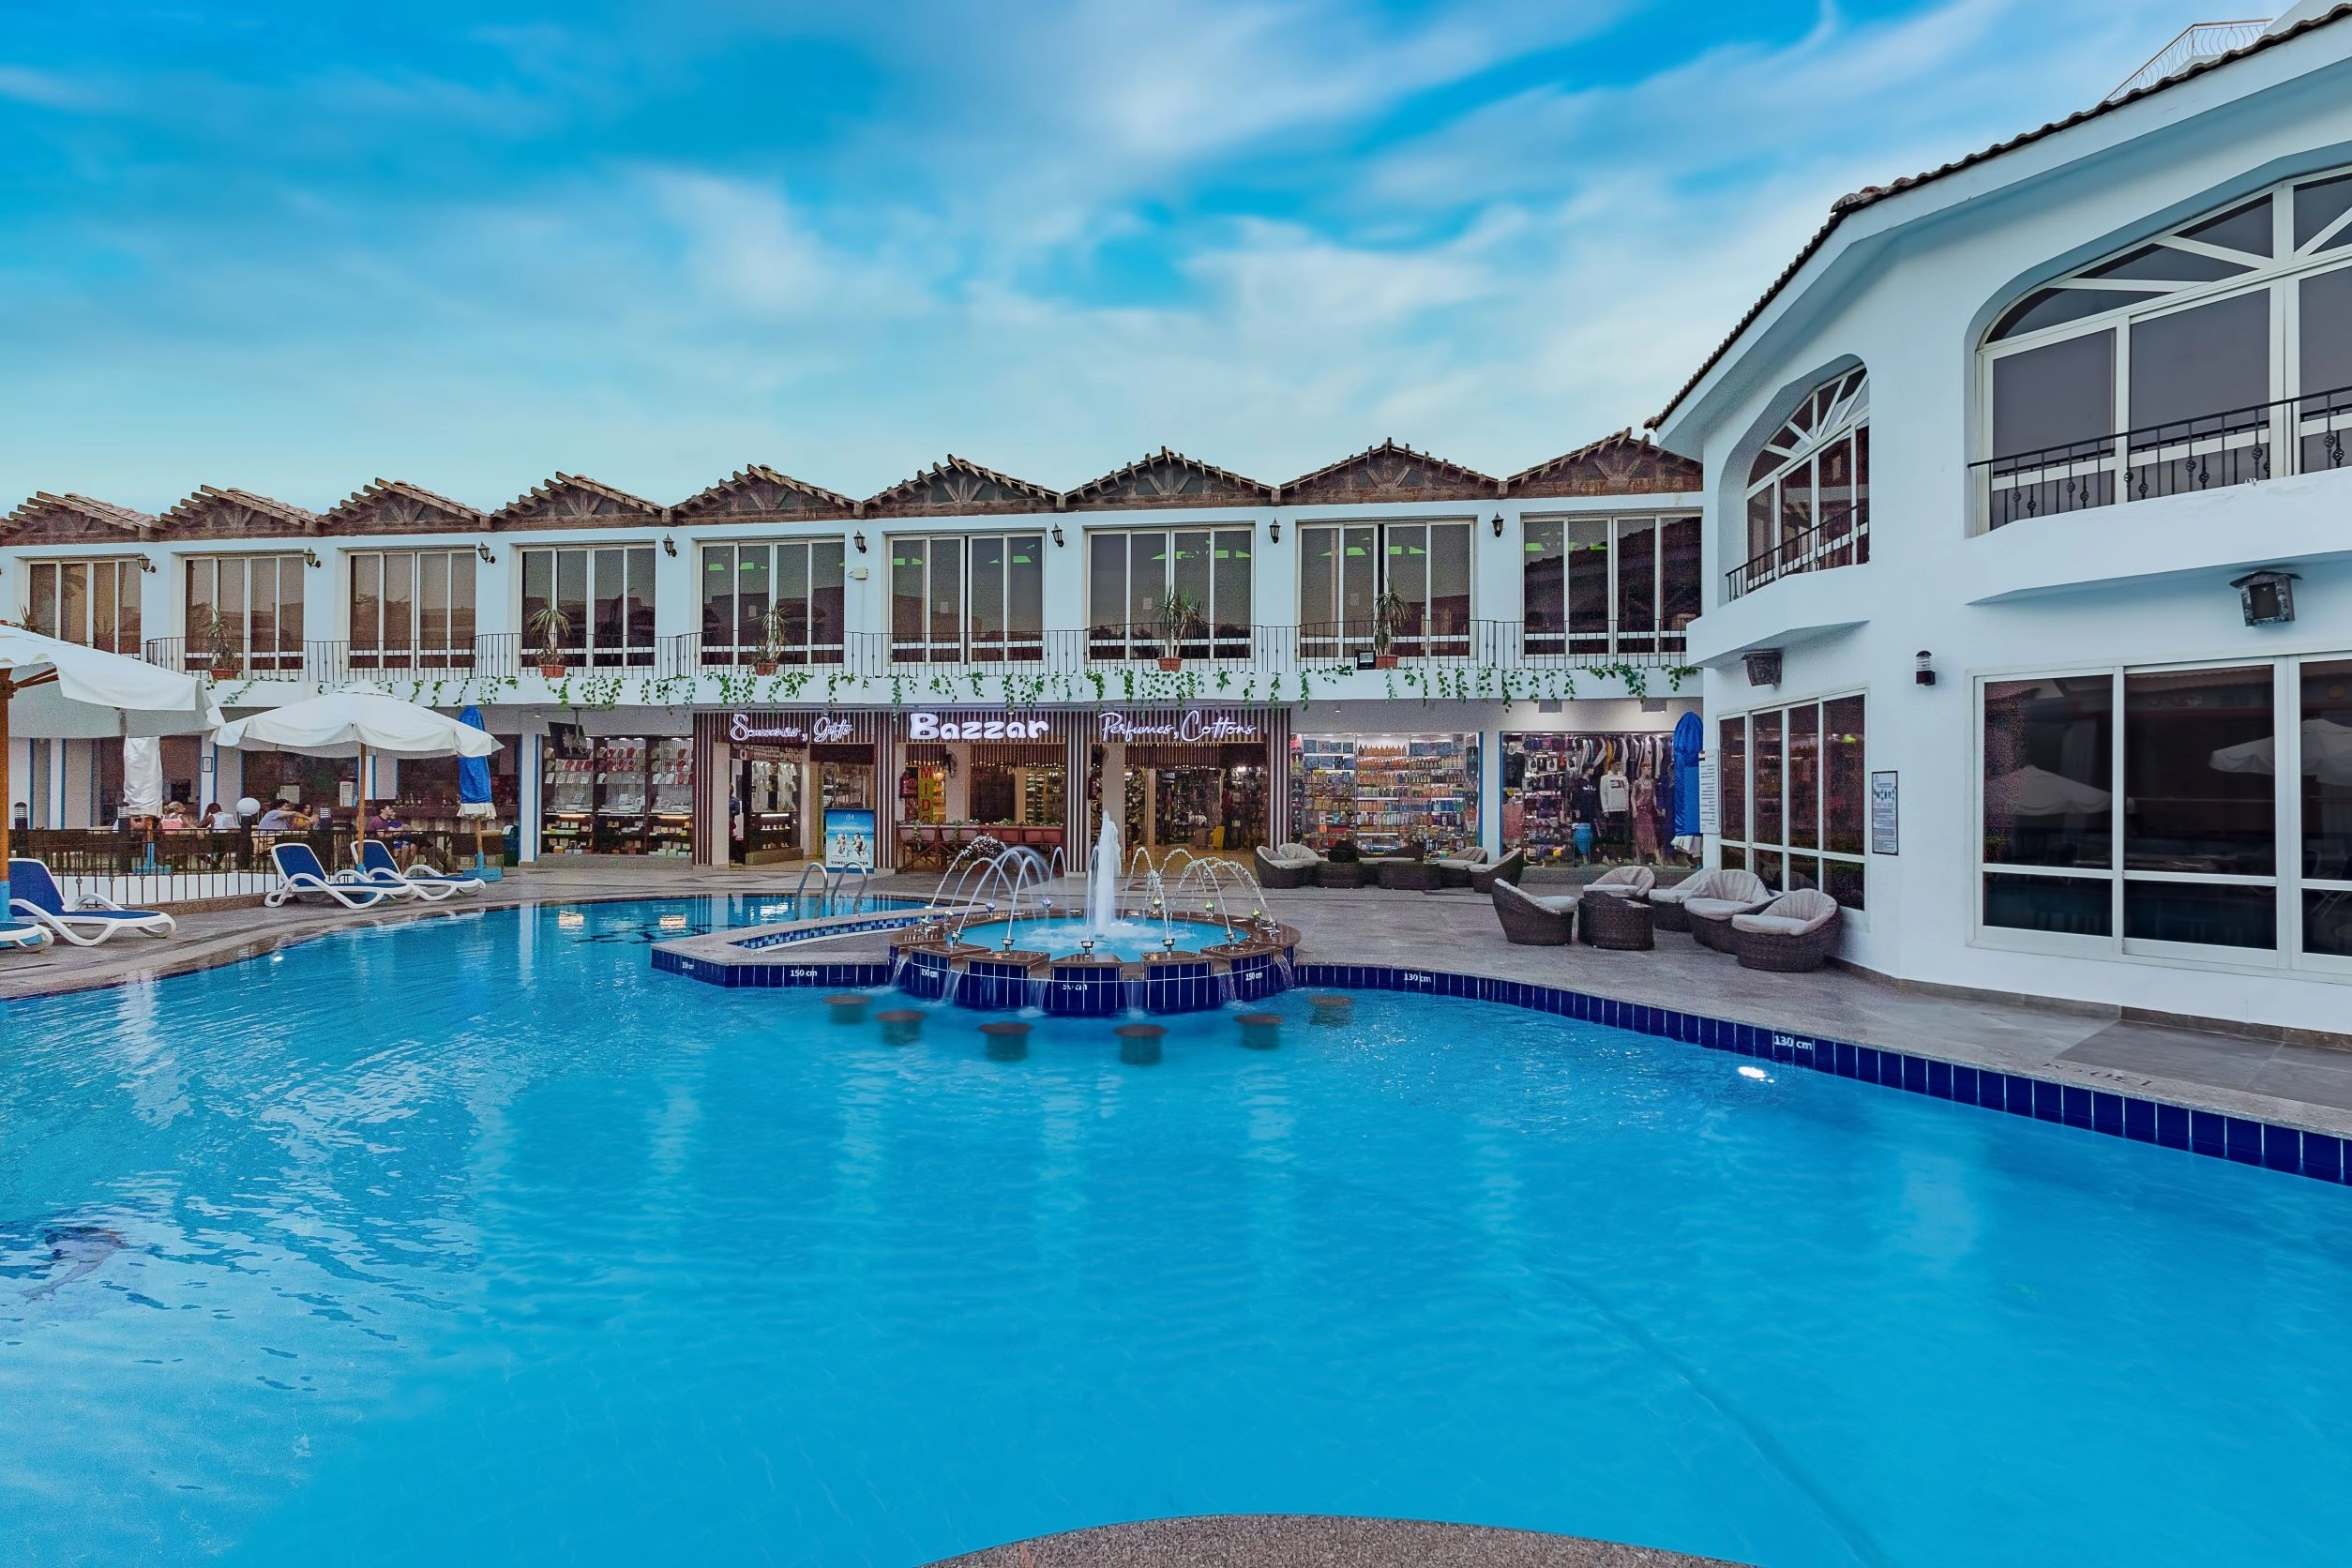 Main Swimming Pool,Heated Pool in winter season ,Adult Pool,Pool Bar,Minamark Hotel -Hurghada